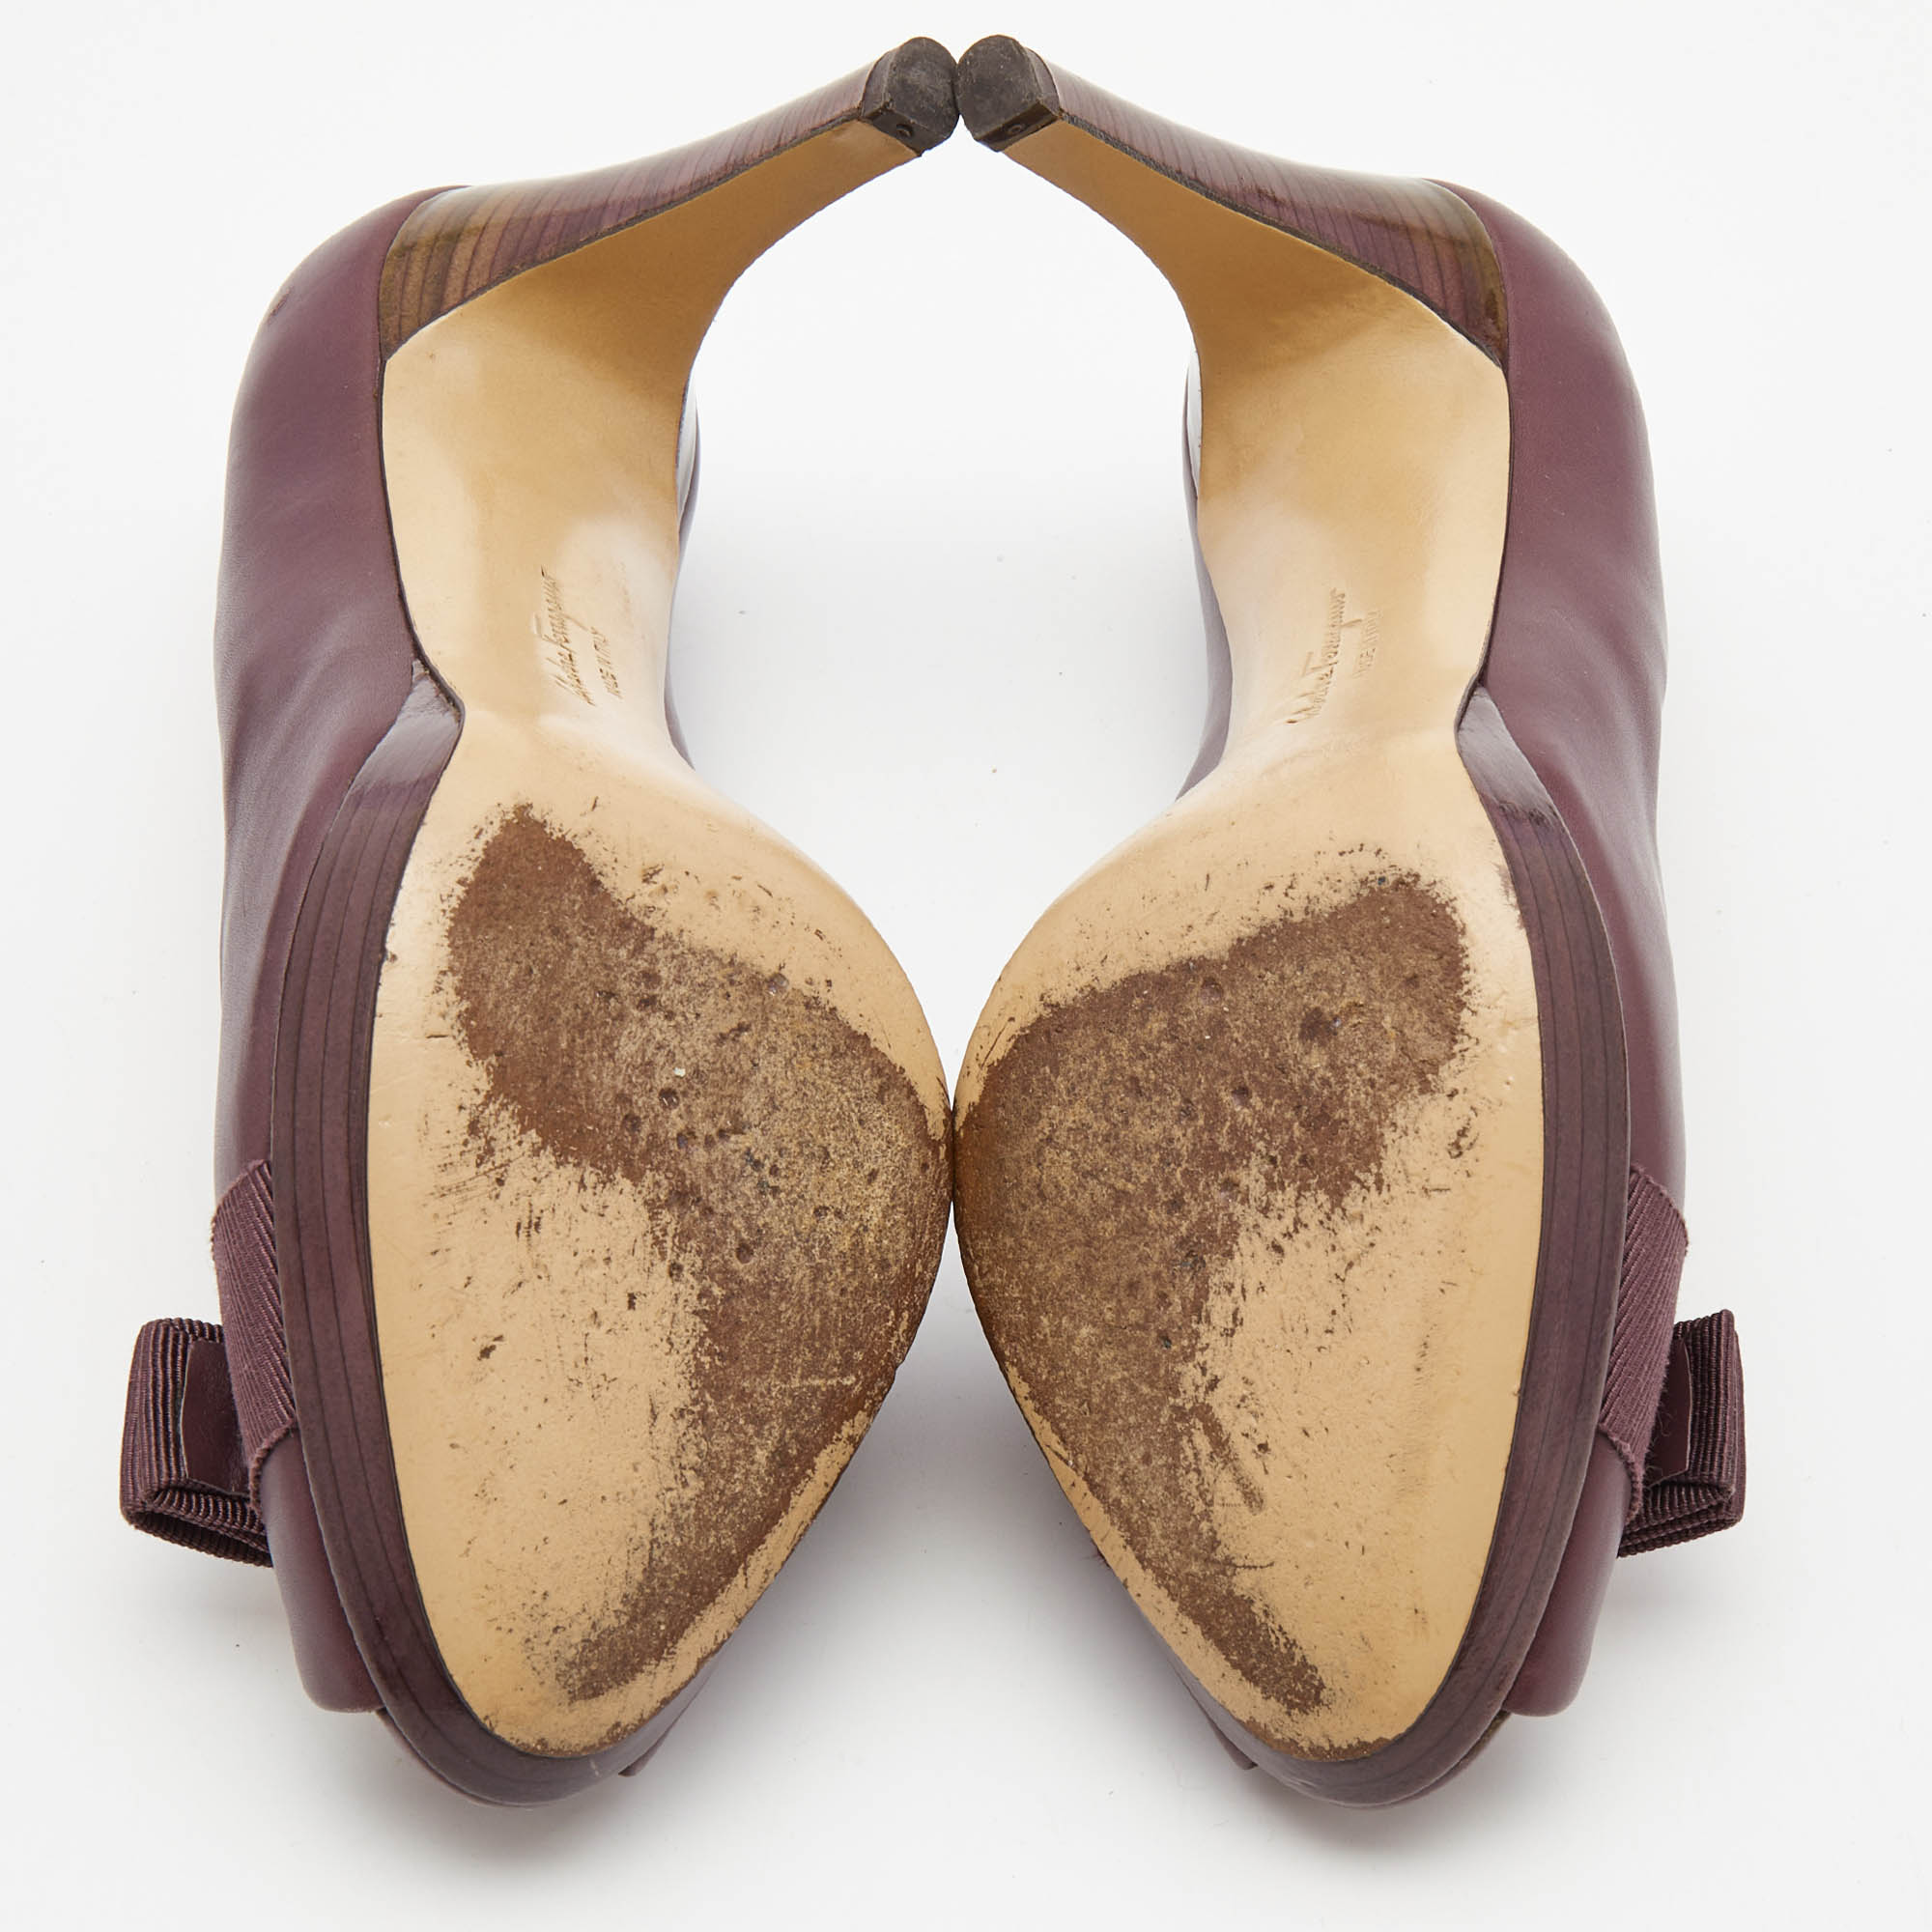 Salvatore Ferragamo Purple Leather Vara Bow Peep Toe Platform Pumps Size 37